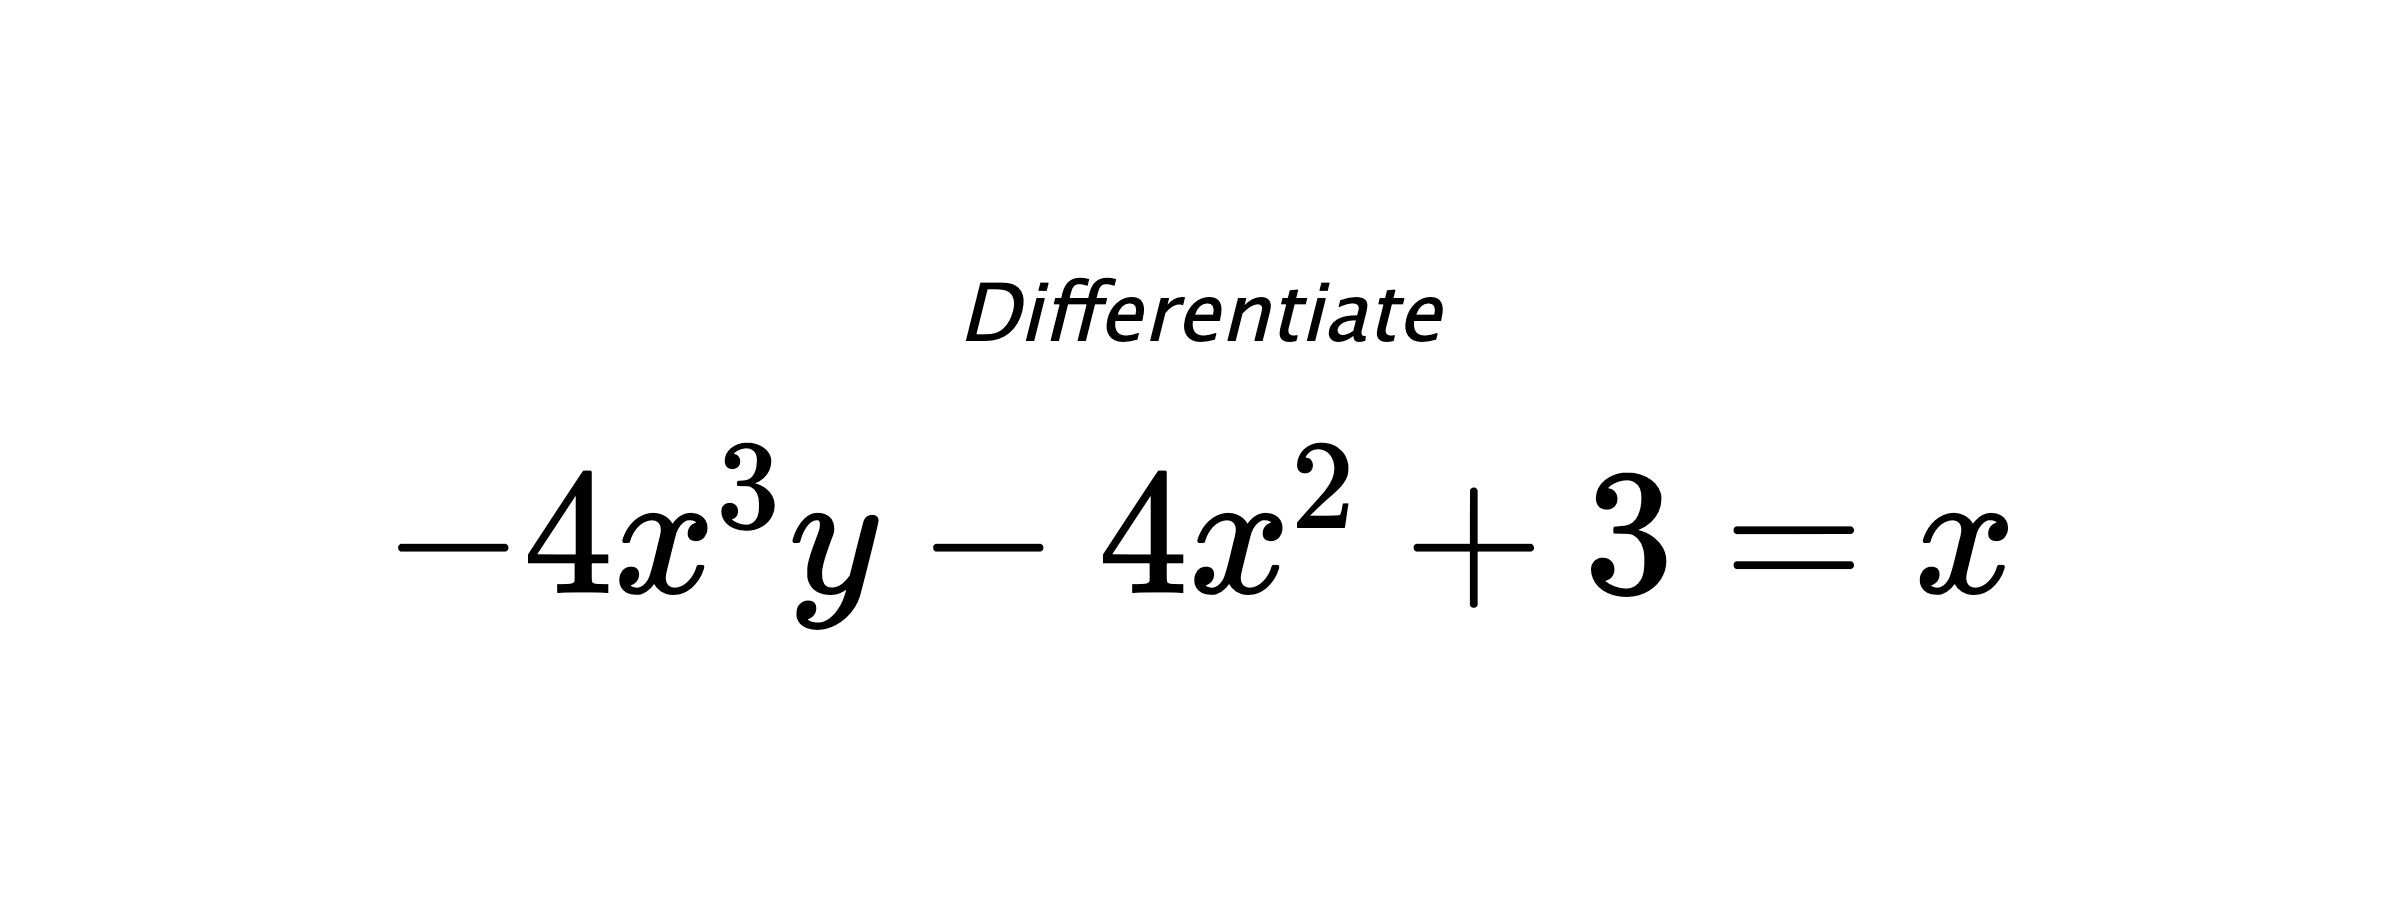 Differentiate $ -4x^3y-4x^2+3 = x $